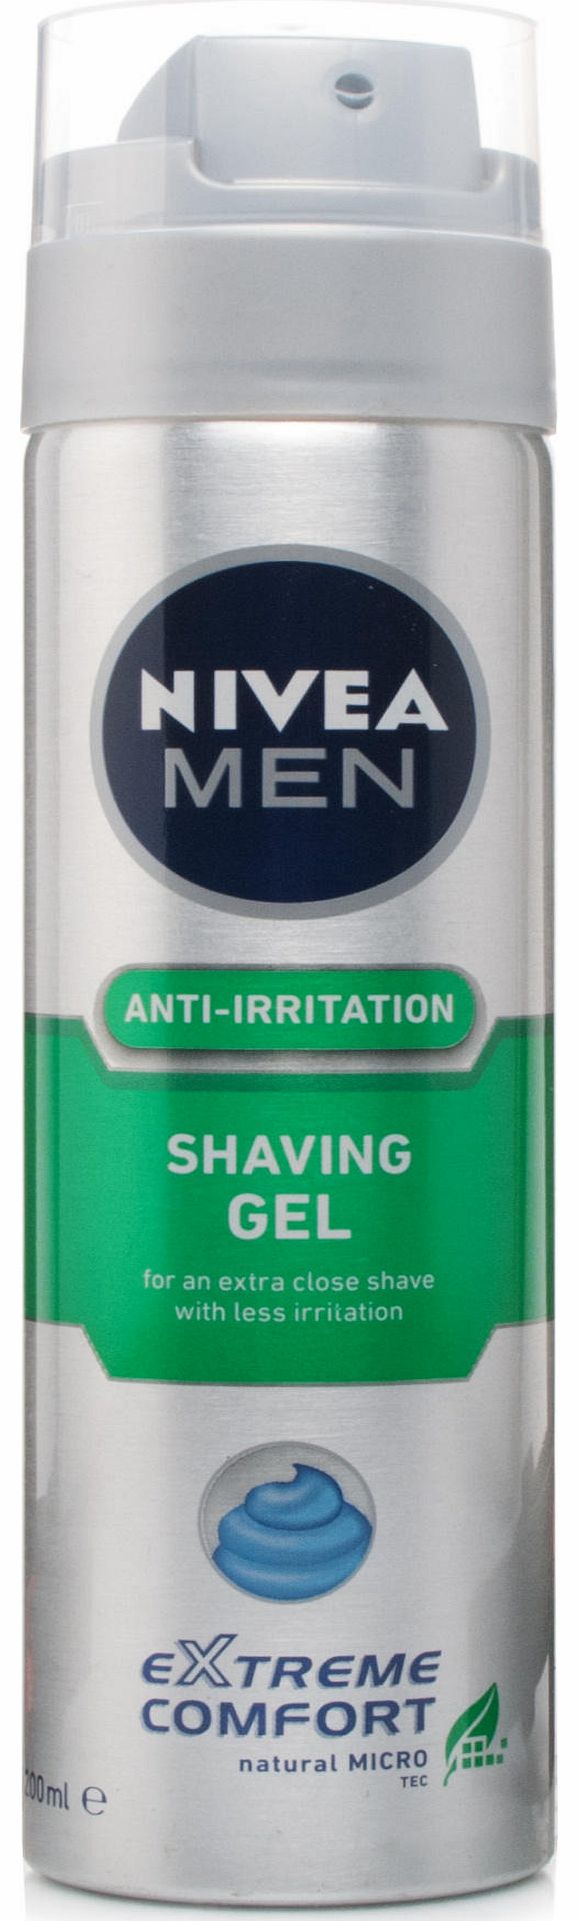 For Men Extreme Comfort Shaving Gel